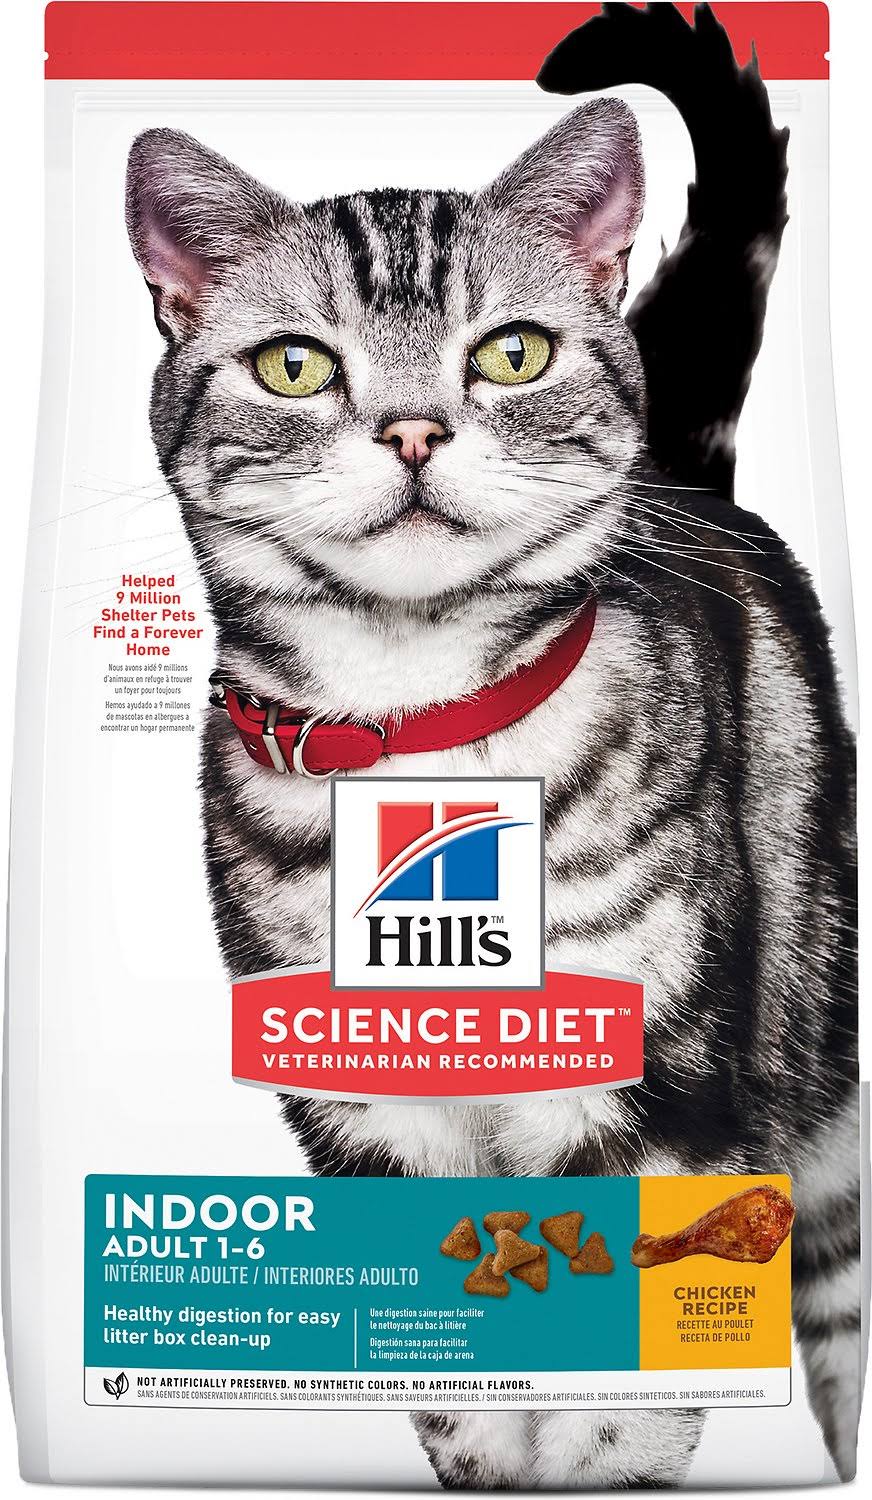 Hill's Science Diet Indoor Premium Natural Cat Food - Chicken Recipe, Adult 1-6, 15.5 lb